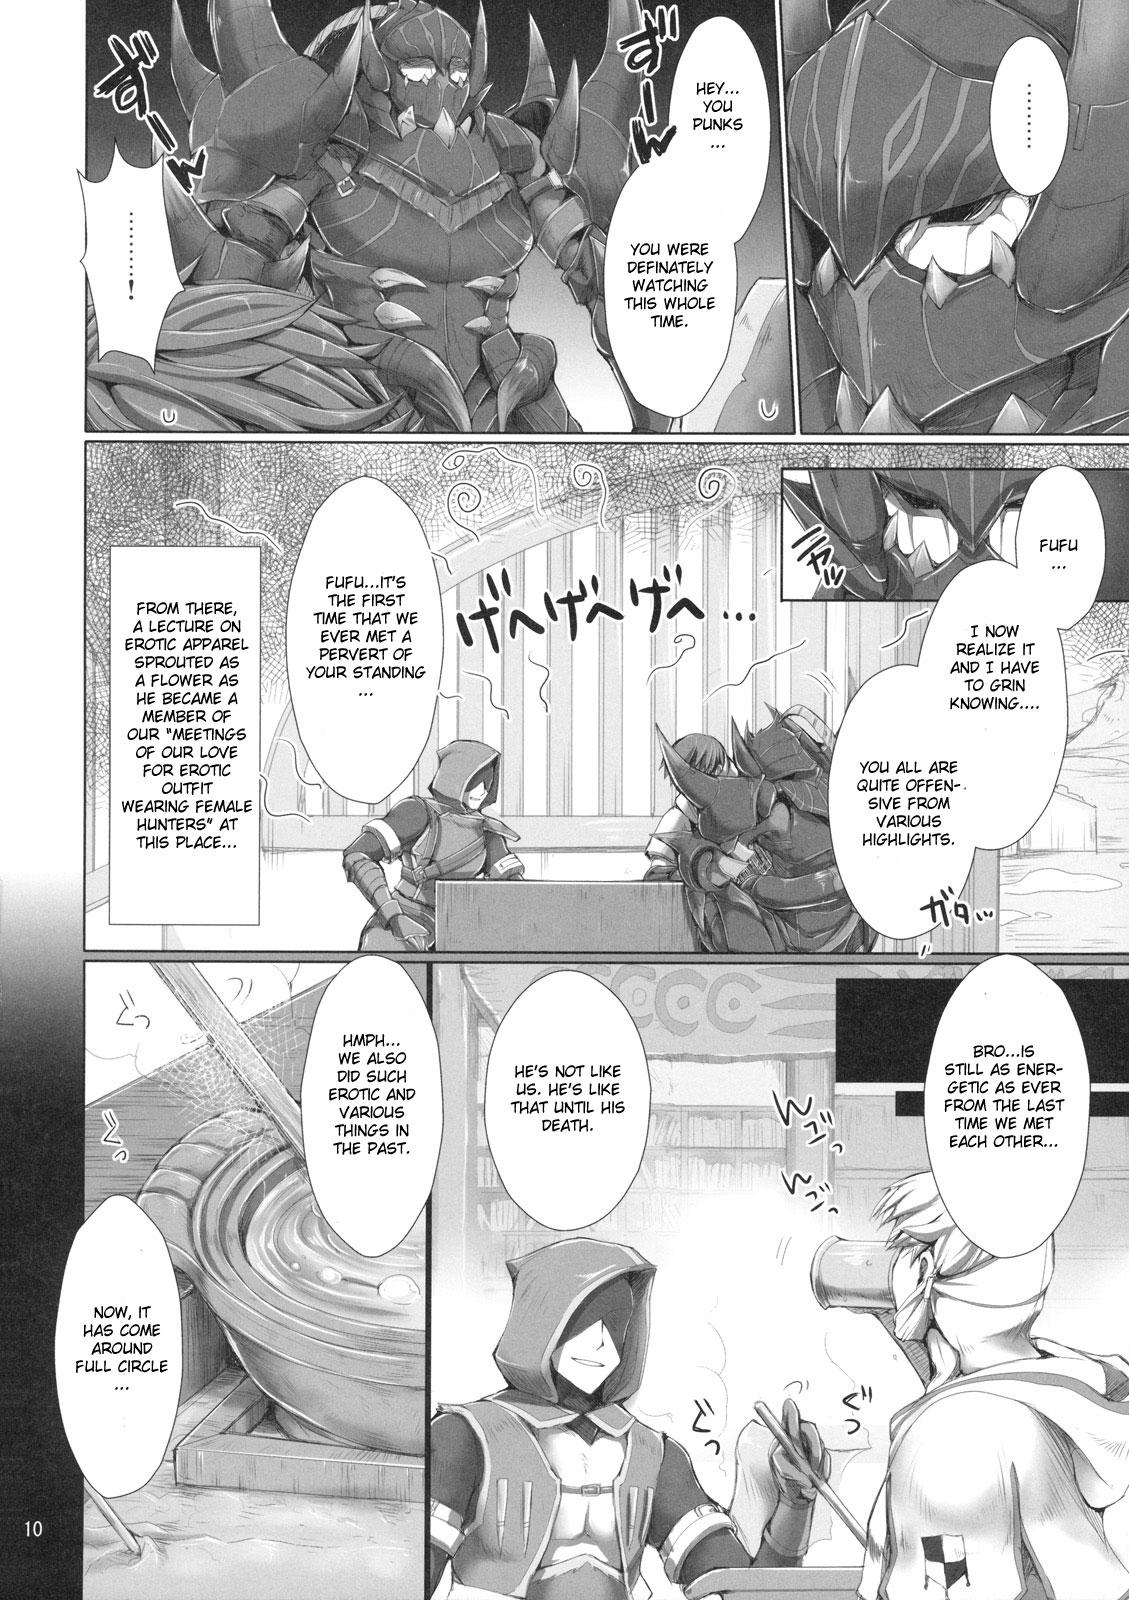 Classroom Monhan no Erohon 7 - Monster hunter Tribute - Page 9